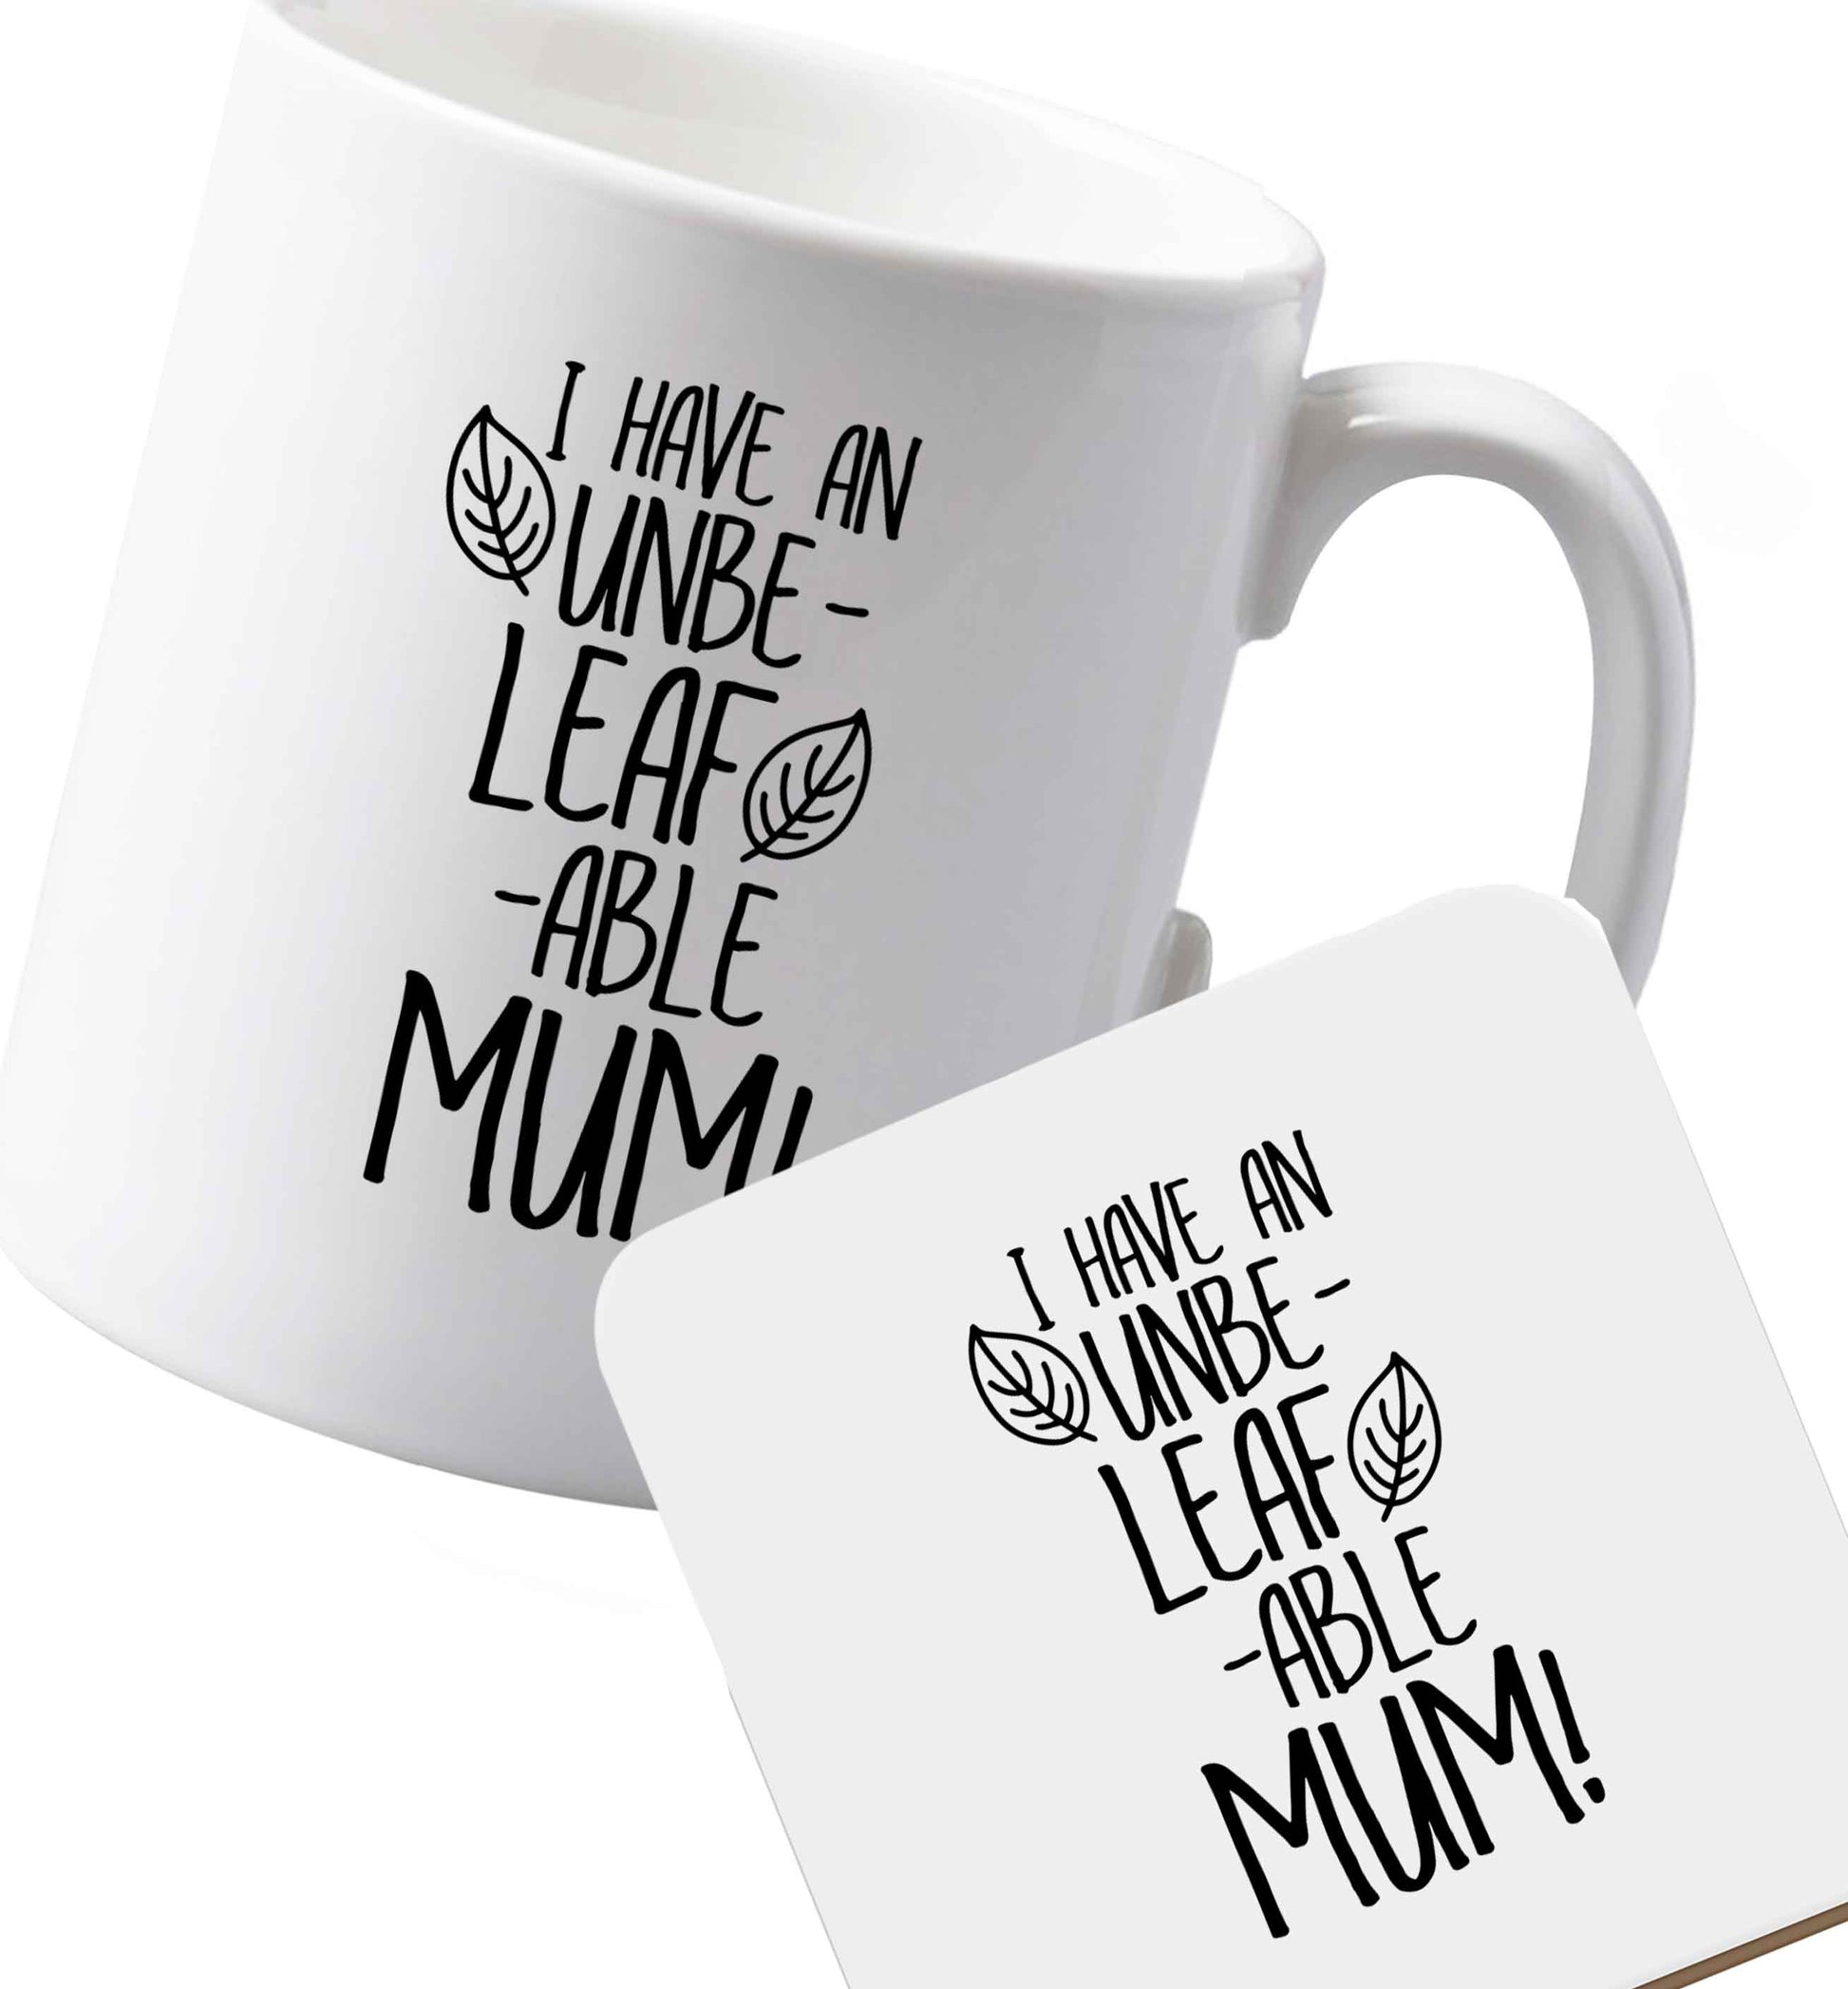 10 oz Ceramic mug and coaster I have an unbeleafable mum! both sides